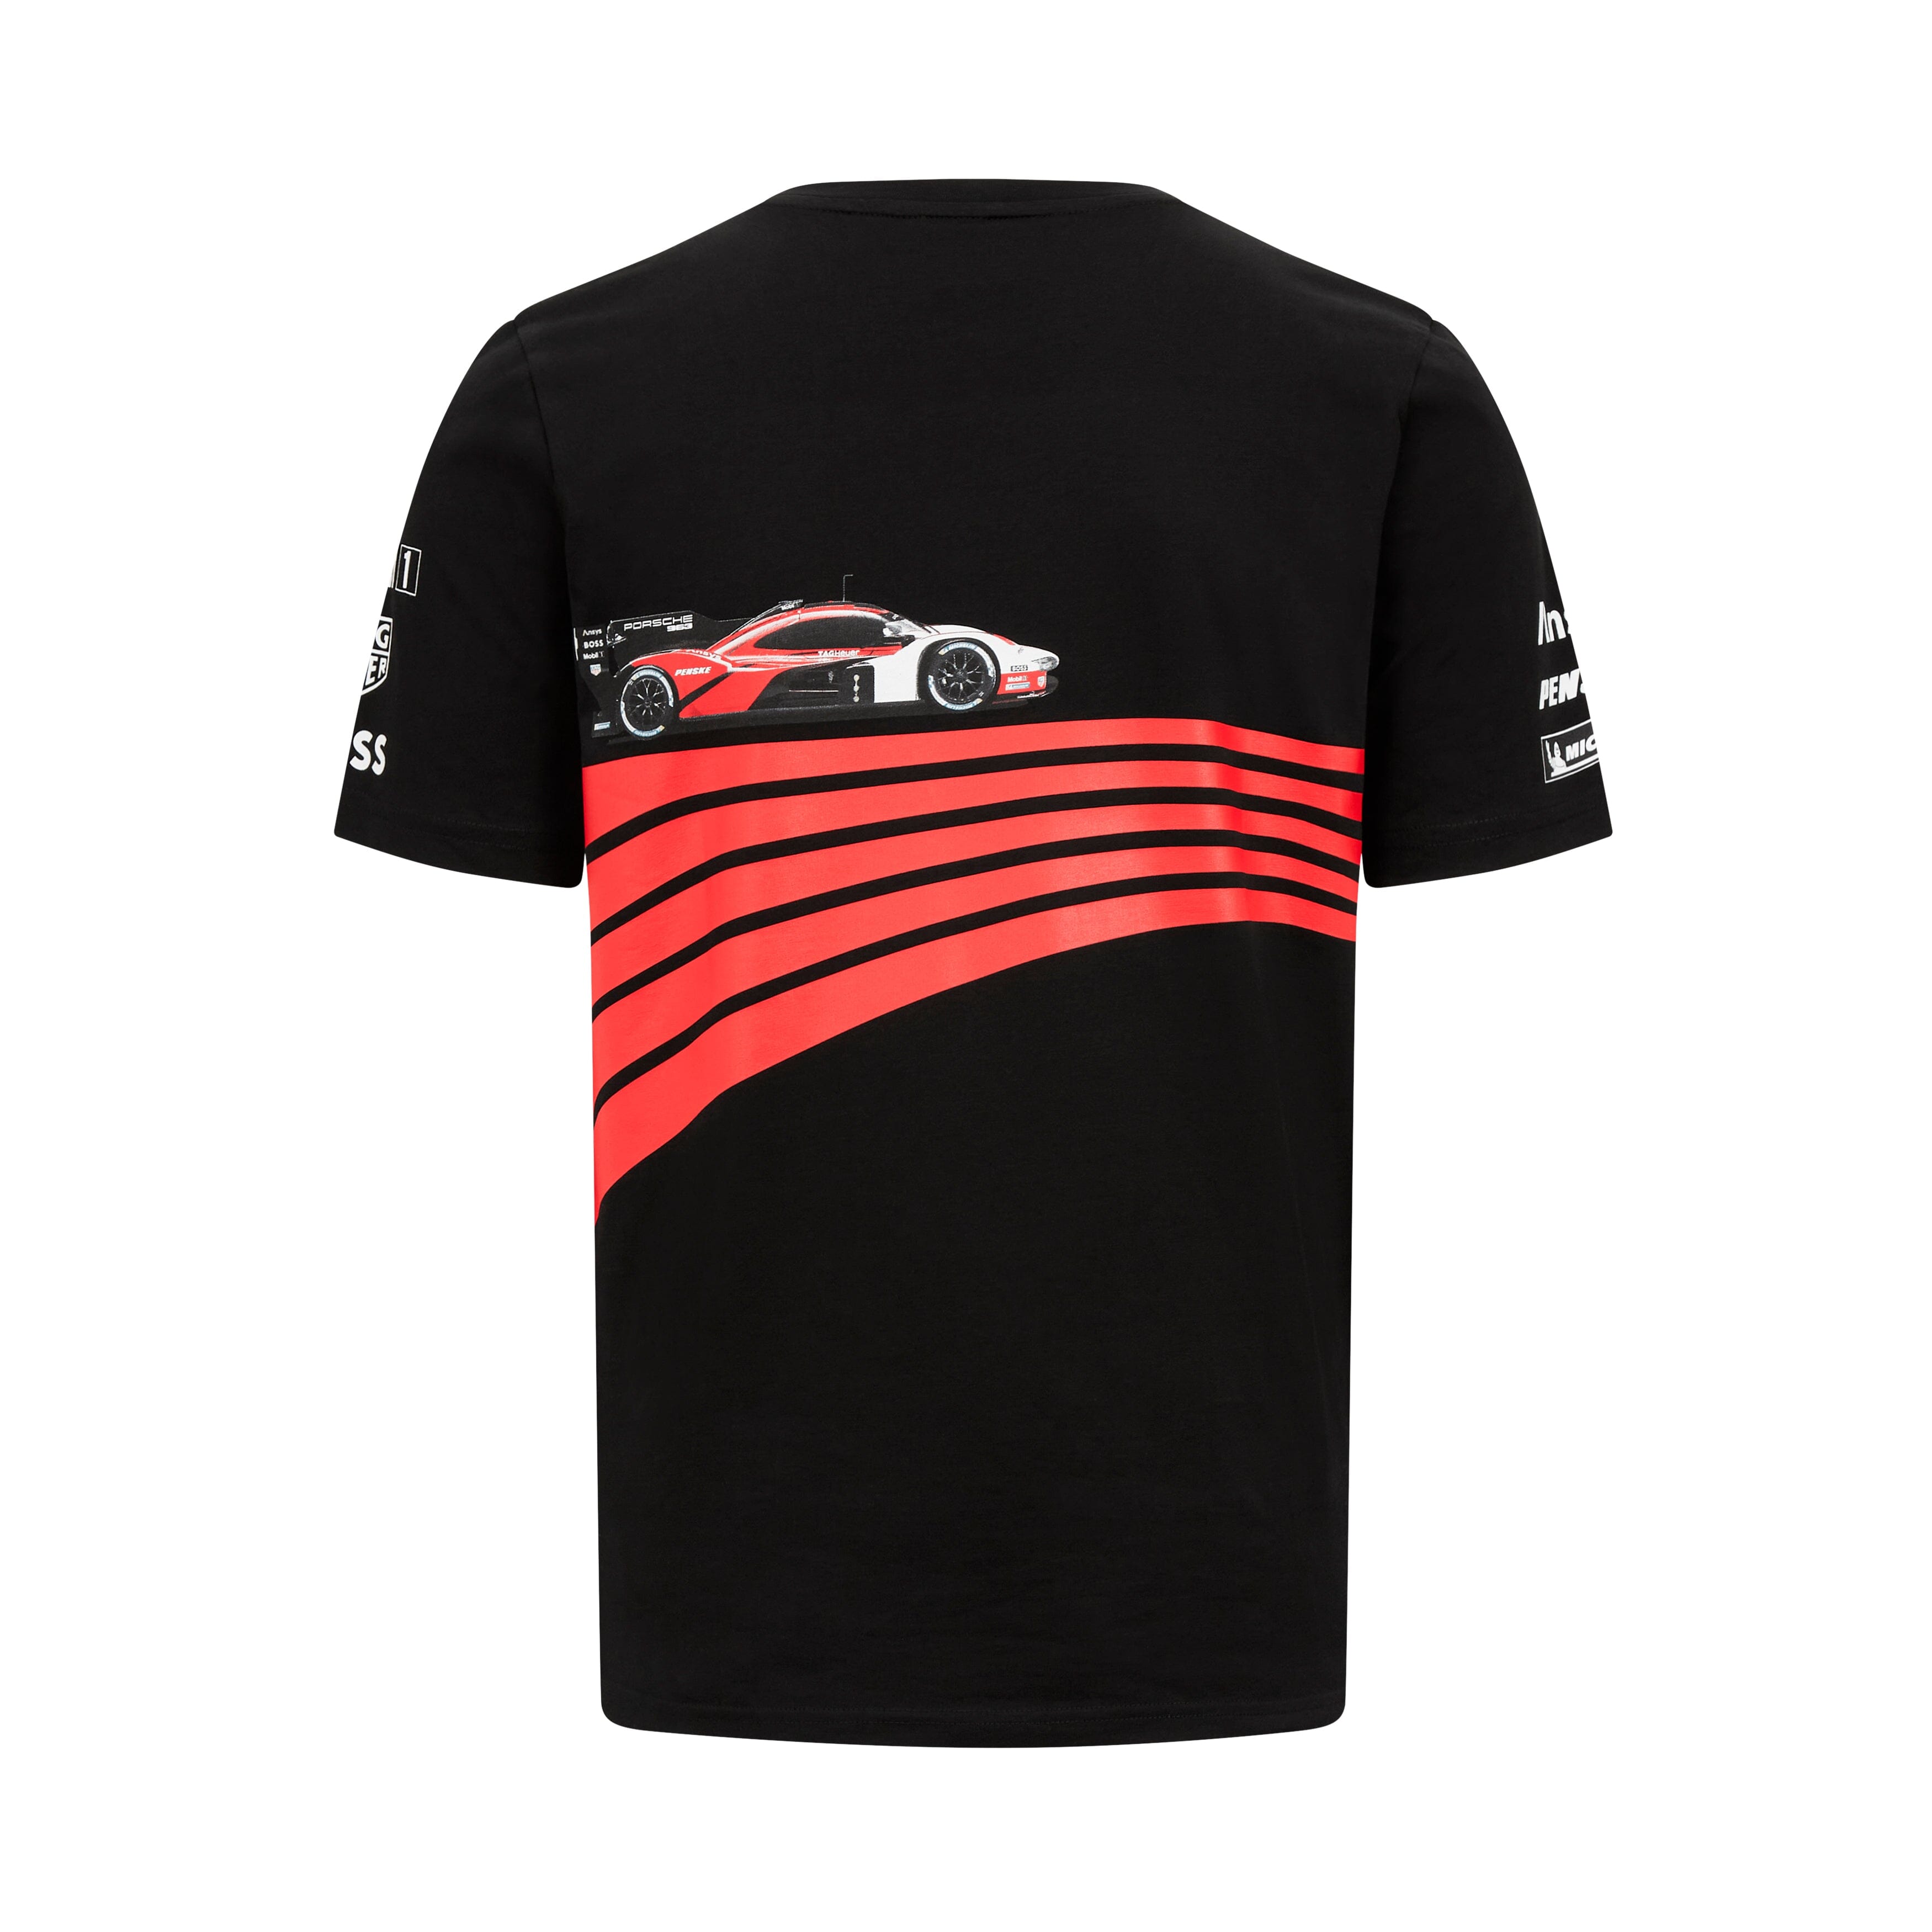 Porsche Penske Motorsport Team T-Shirt - Black